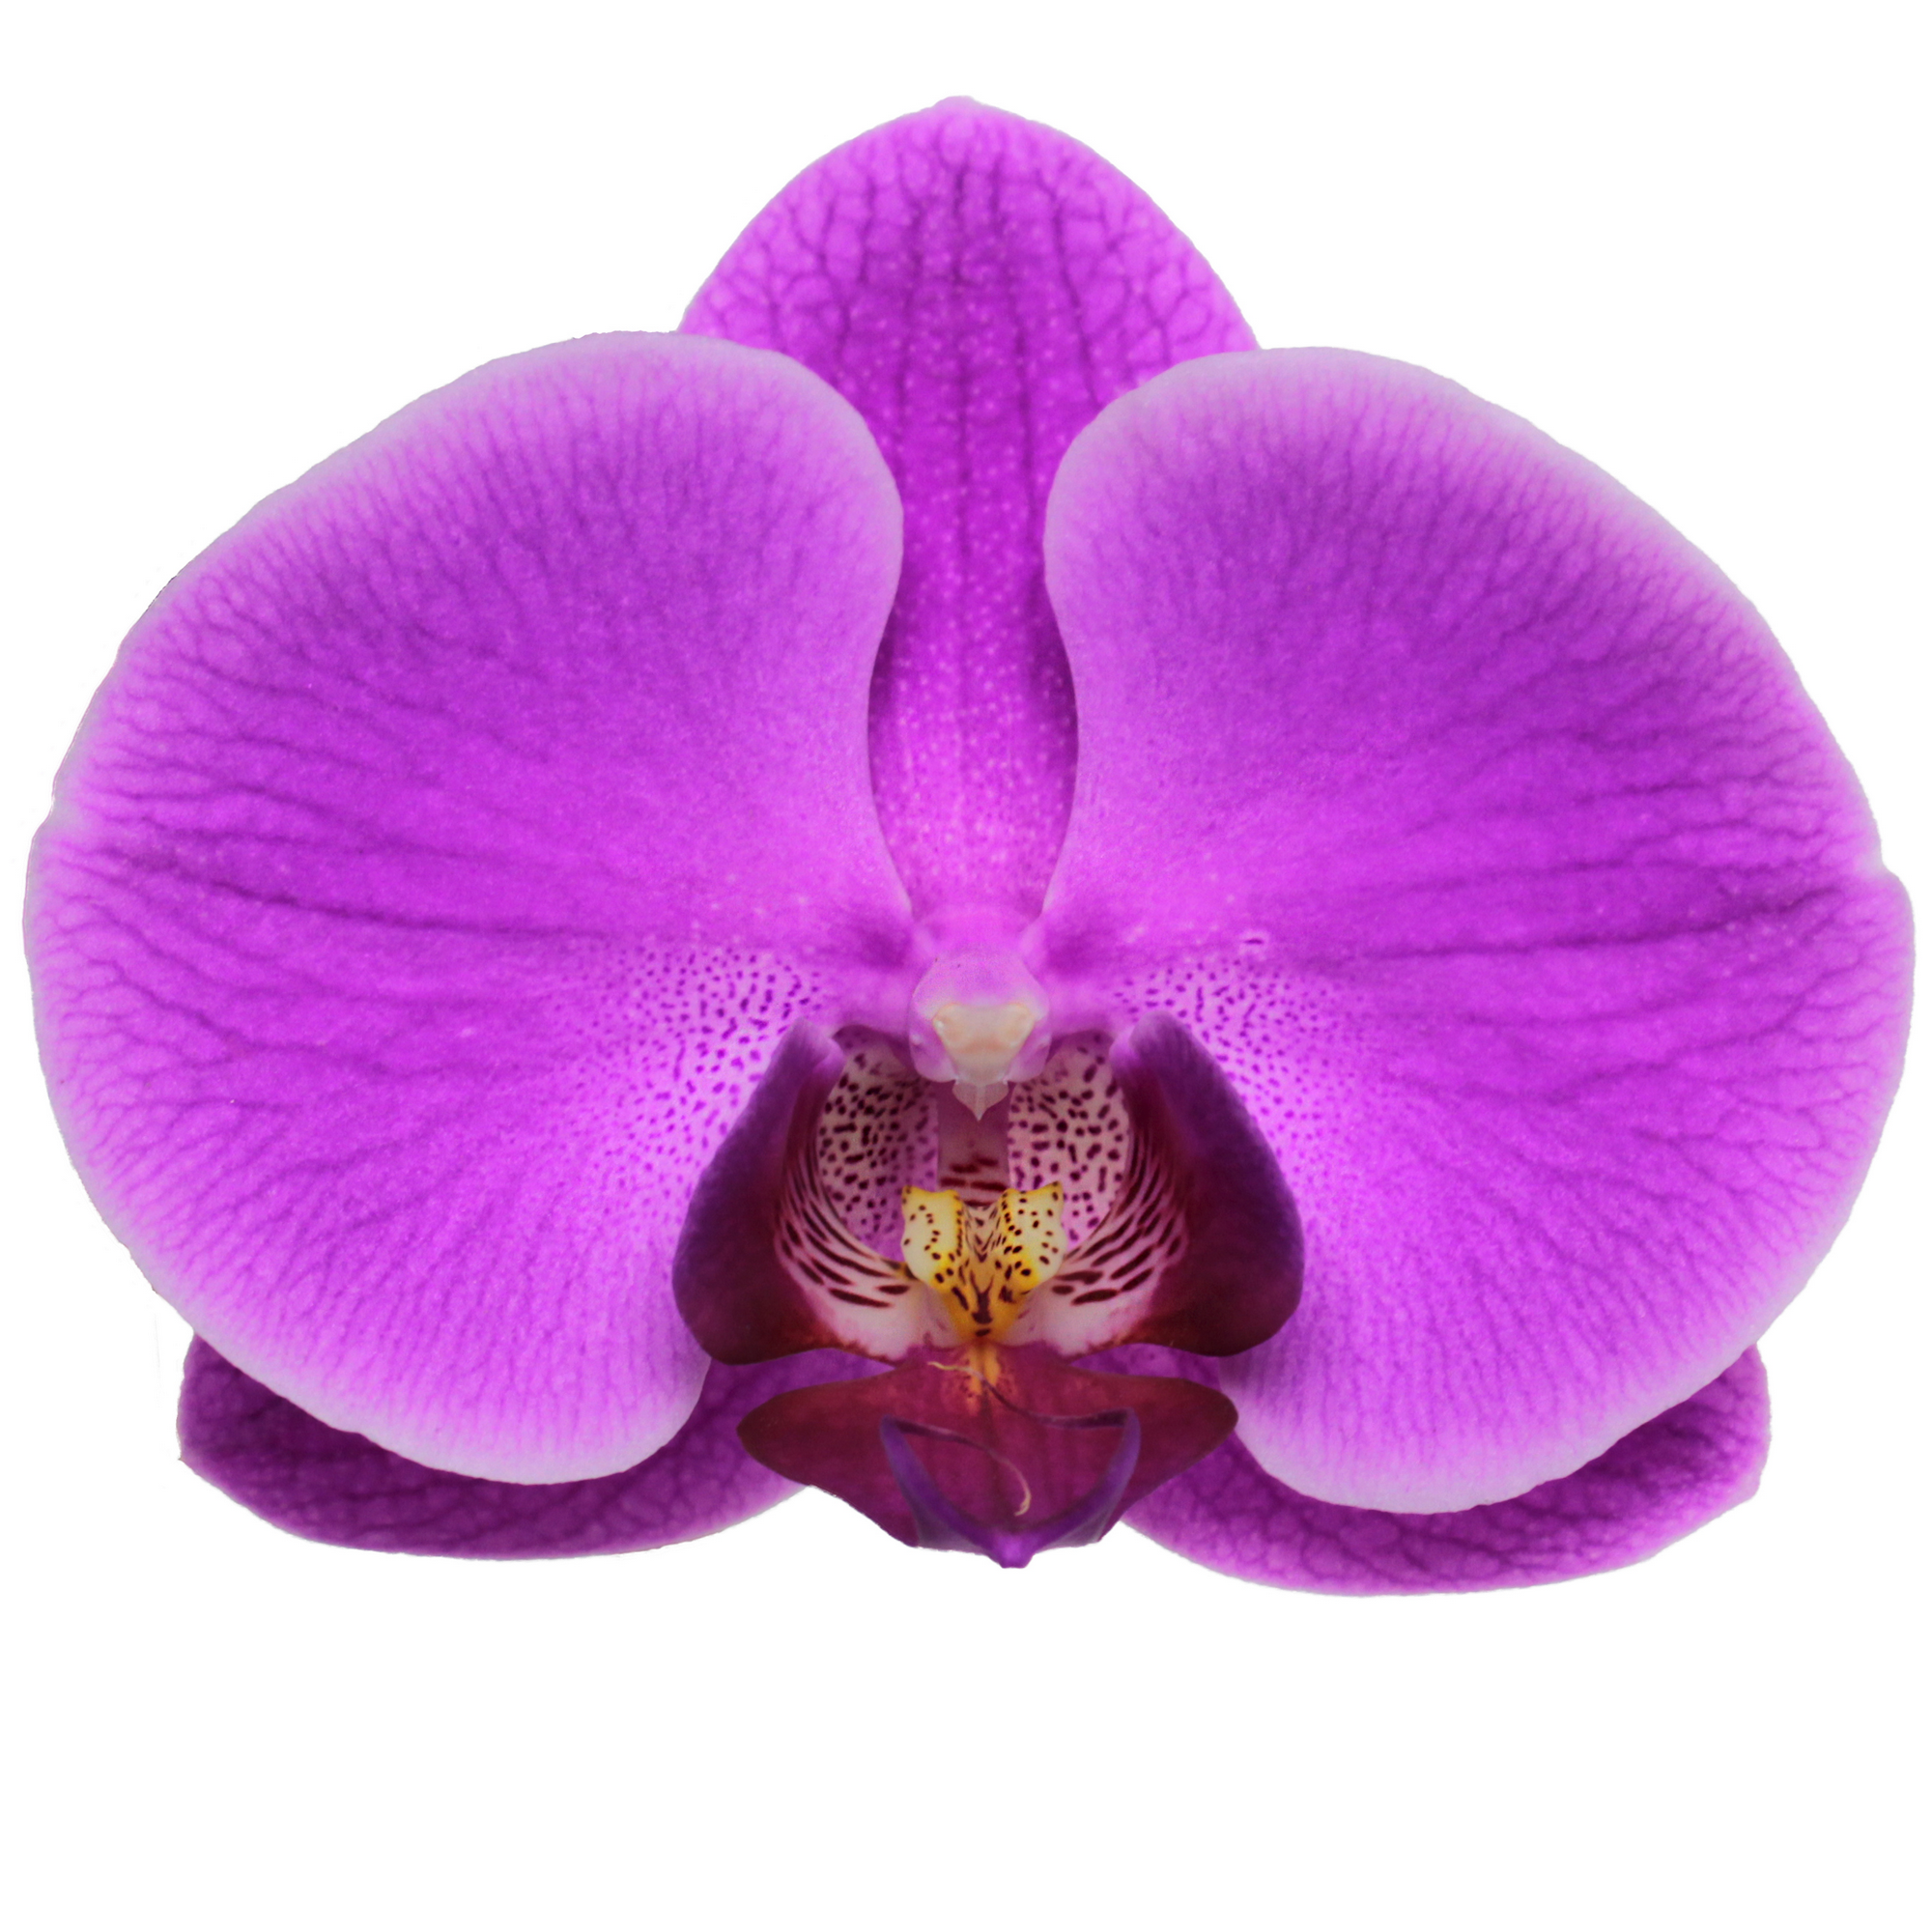 Schmetterlingsorchidee 2 Rispen violett 12 cm Topf + product picture